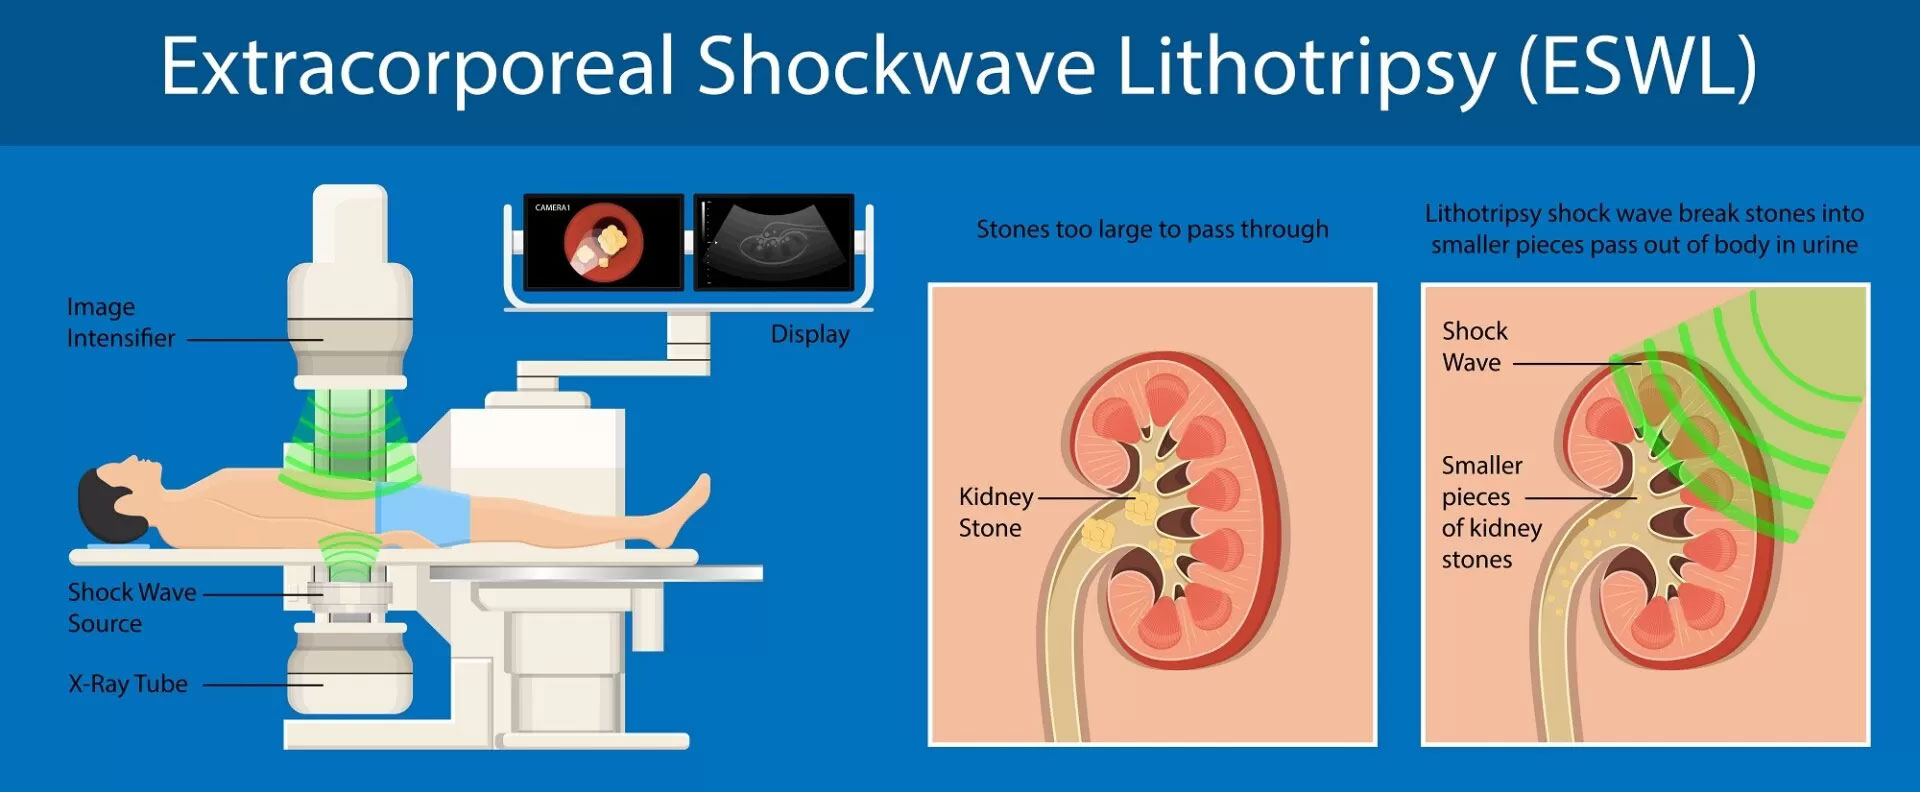 Extracorporeal Shock Wave Lithotripsy Procedure